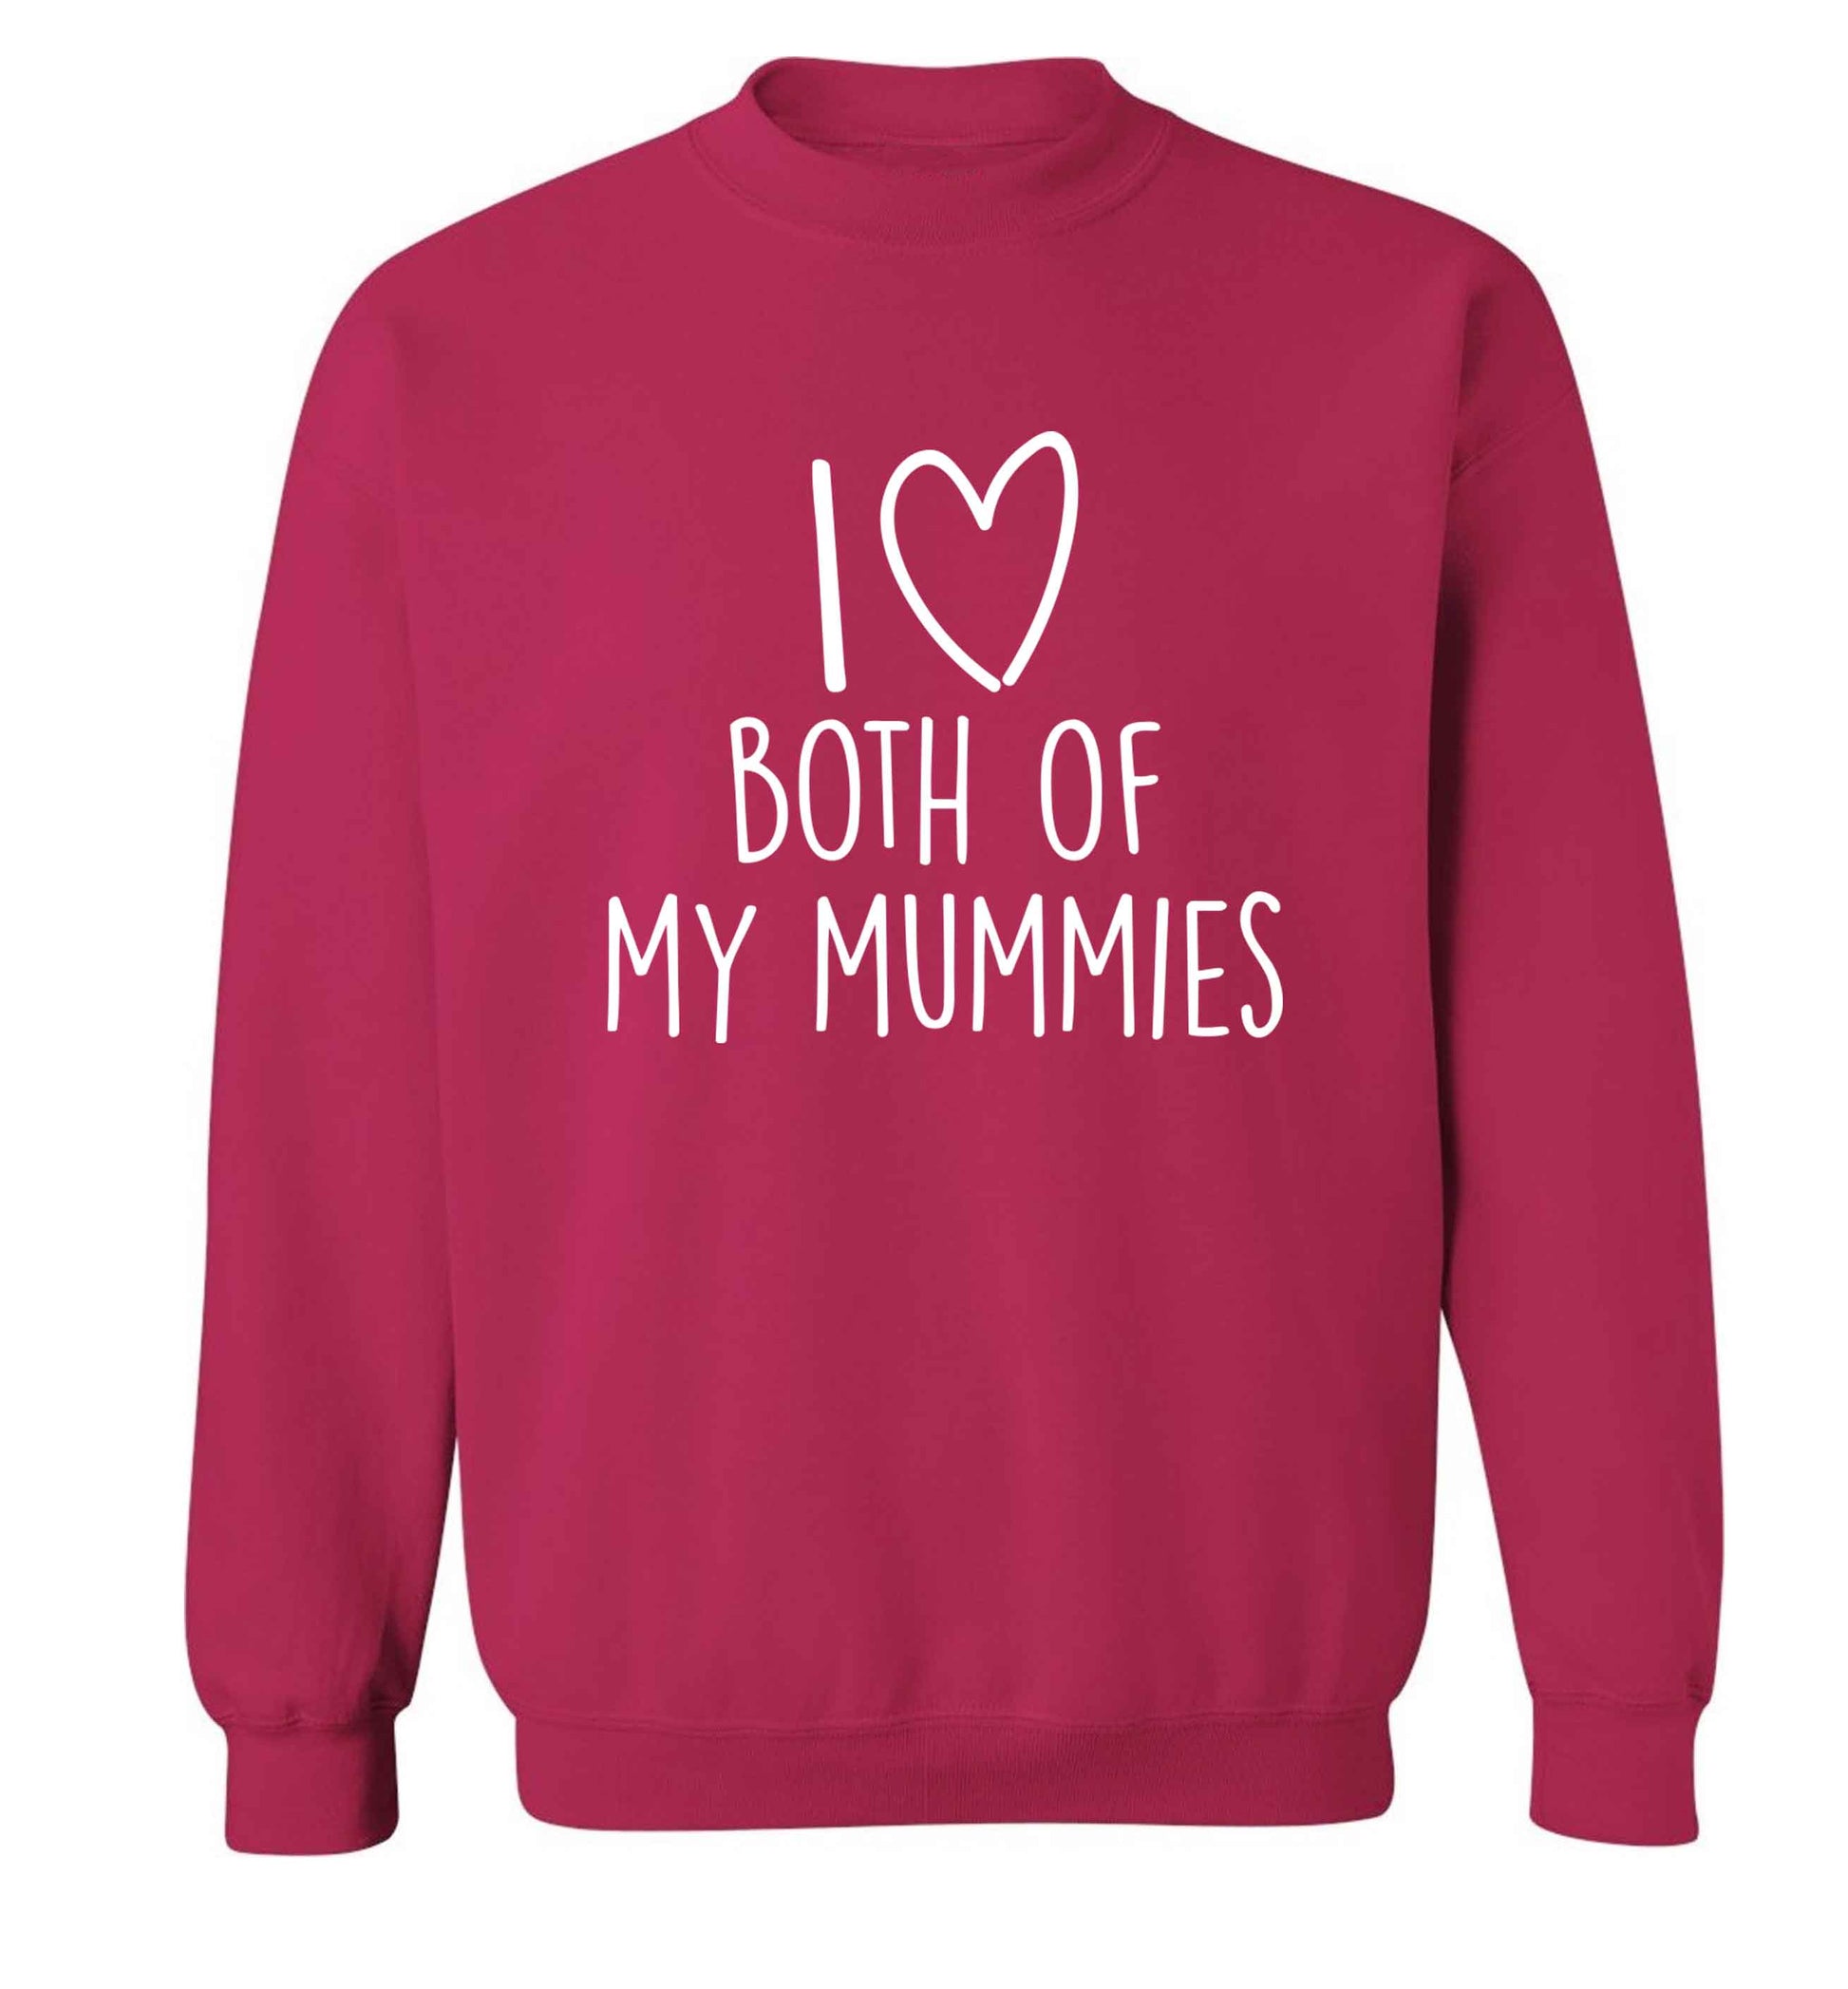 I love both of my mummies adult's unisex pink sweater 2XL